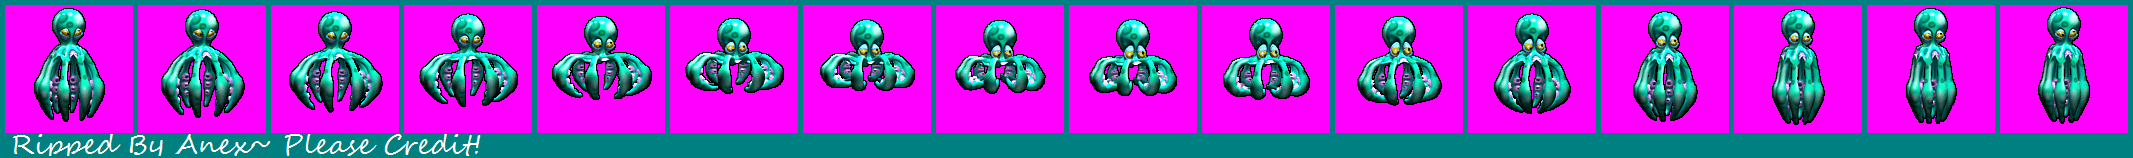 Egg Mania: Eggstreme Madness - Octopus